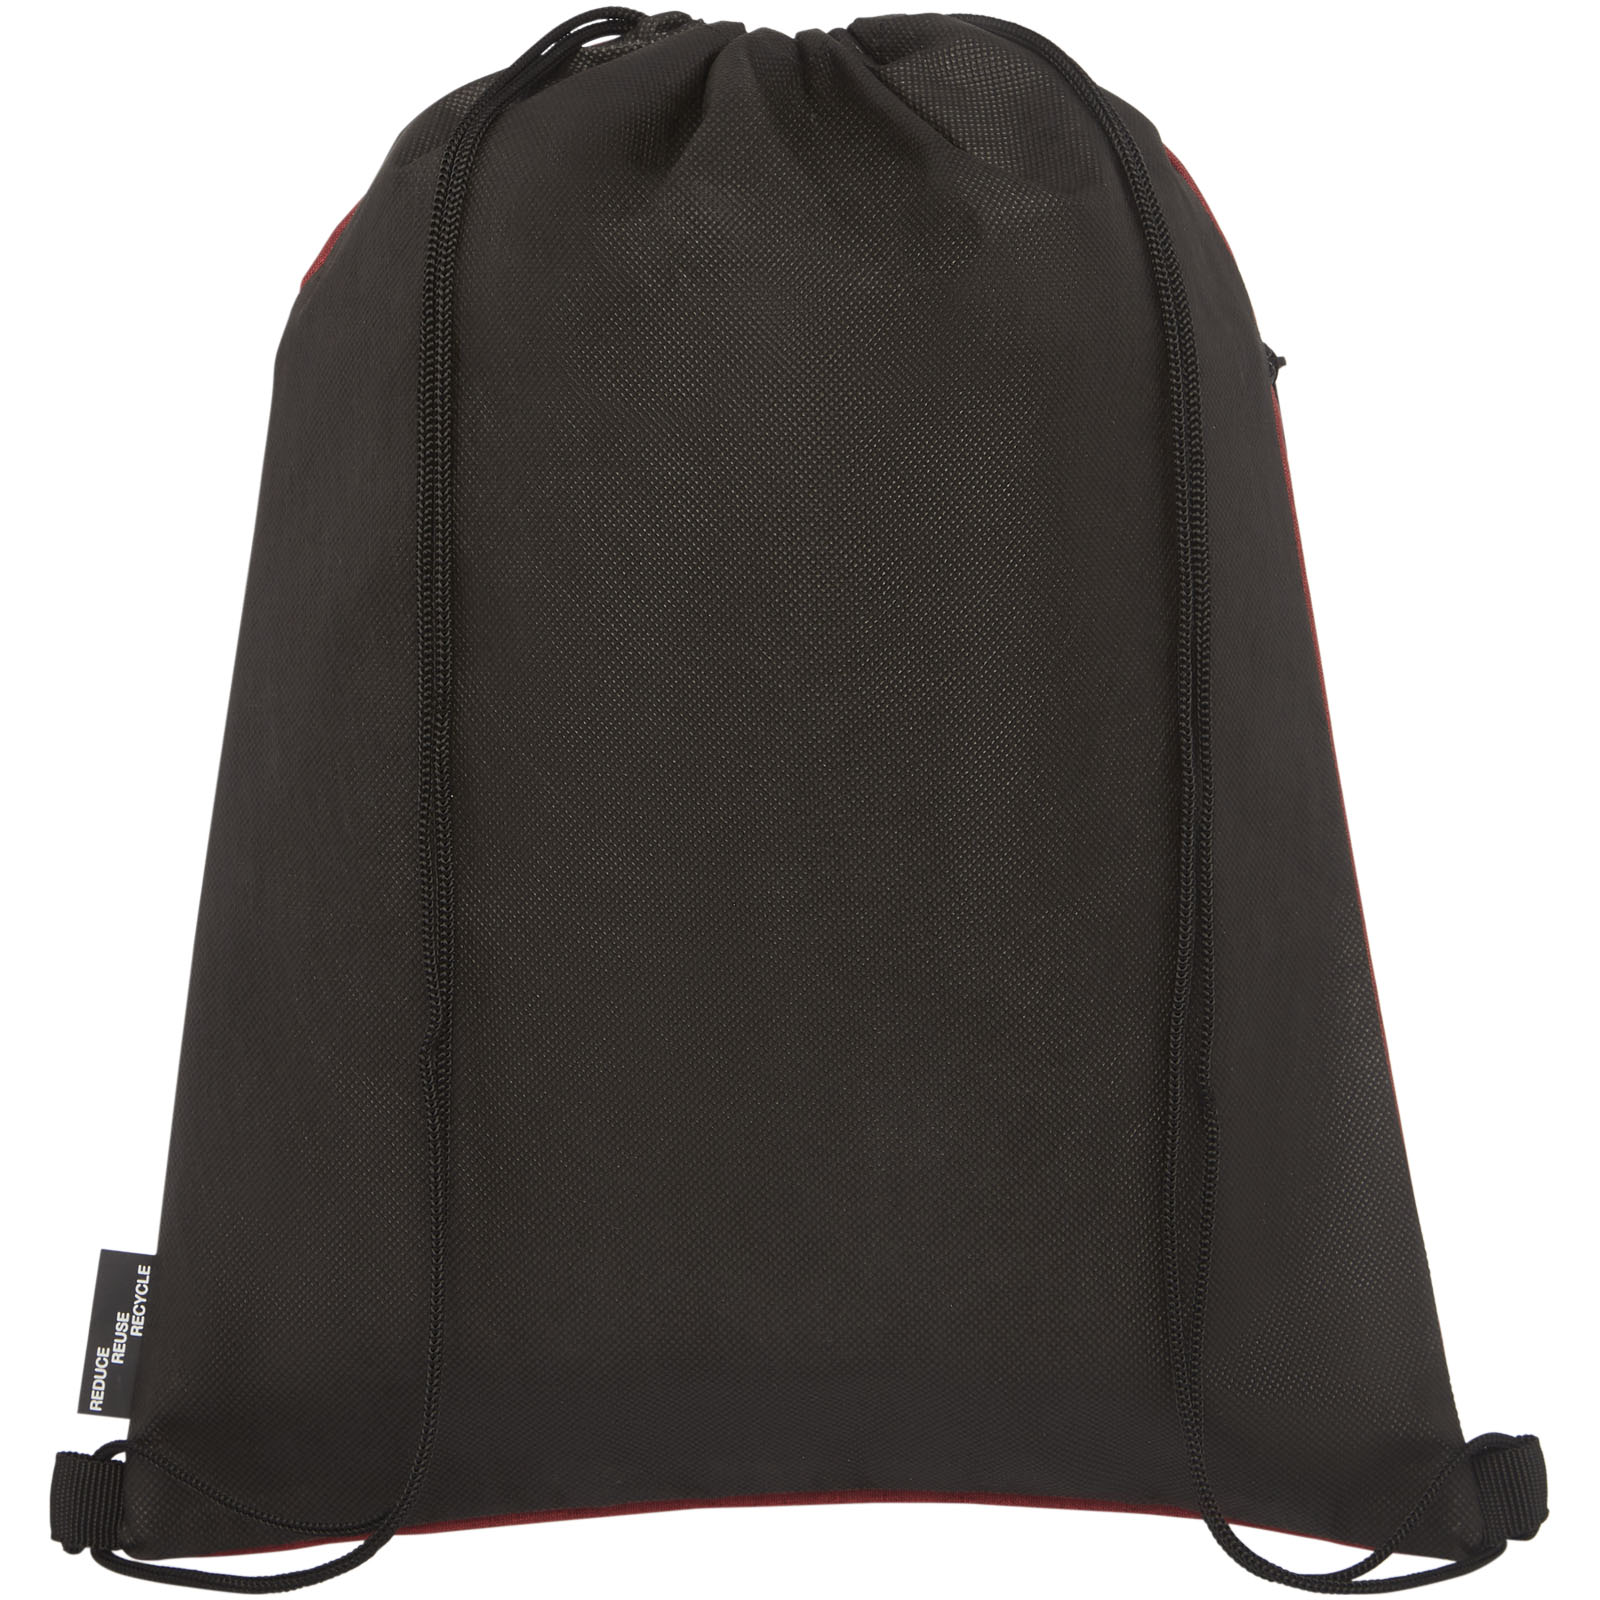 Advertising Drawstring Bags - Ross RPET drawstring bag 5L - 2